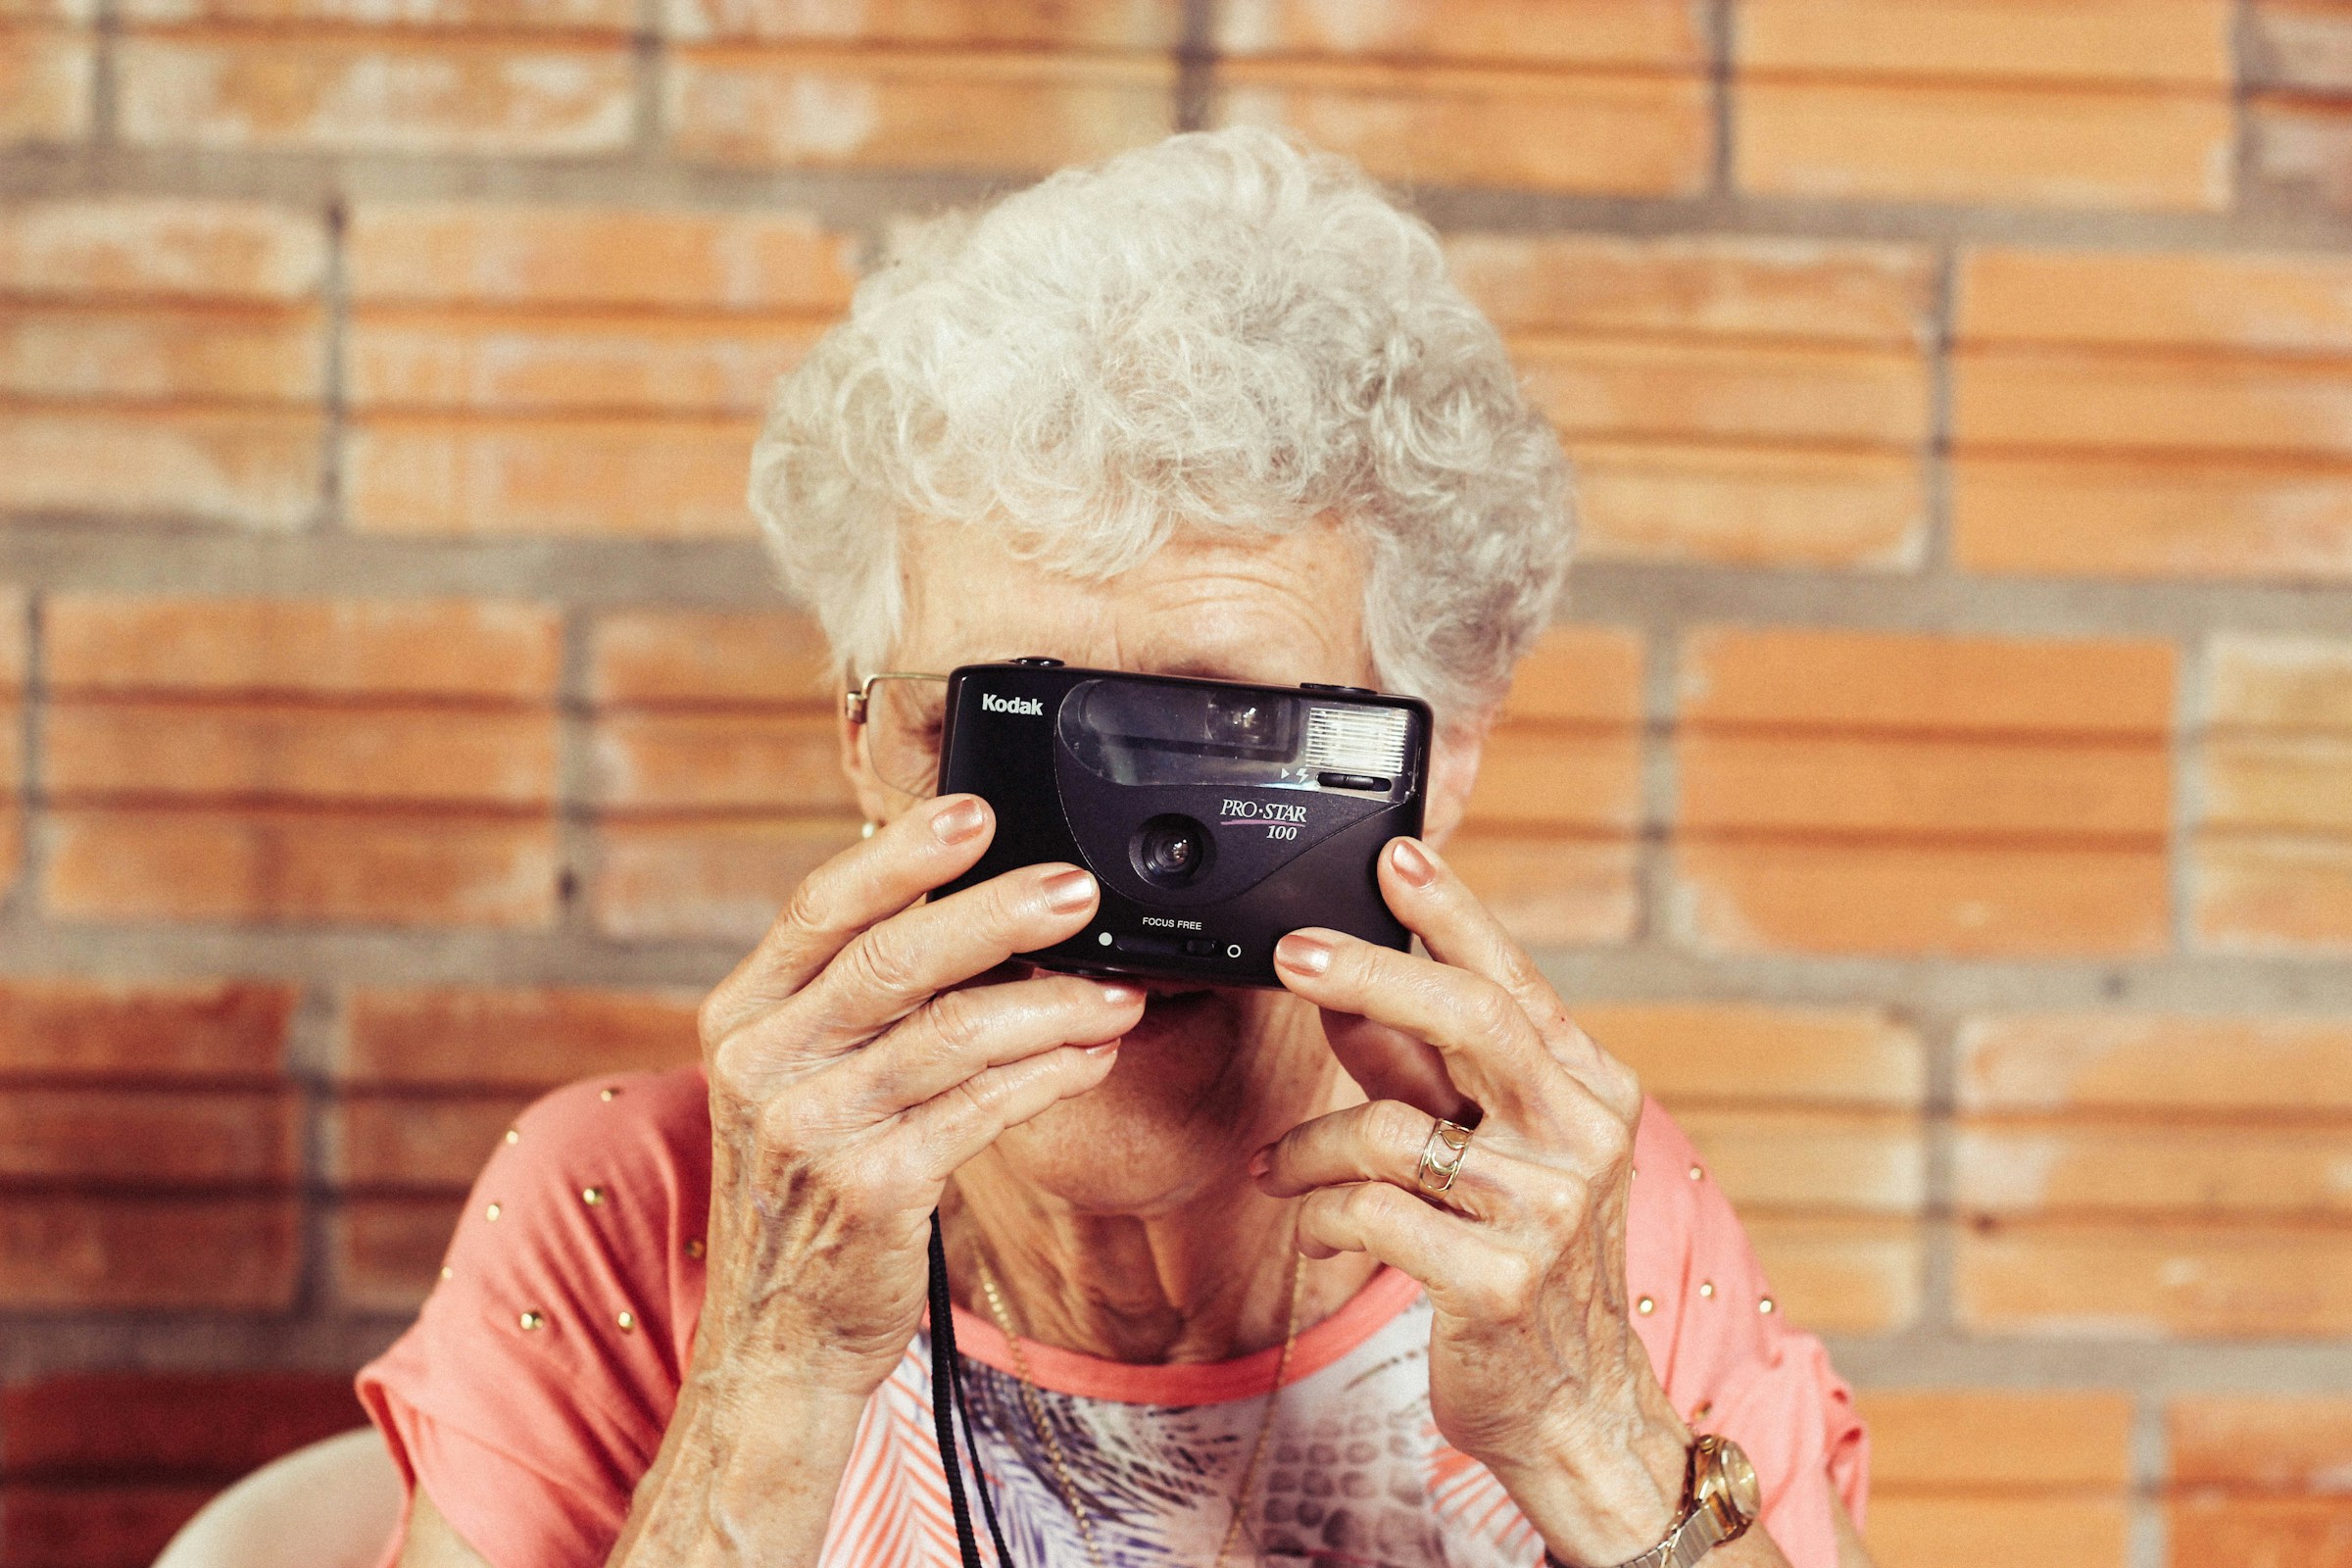 An elderly woman holding a camera | Source: Unsplash